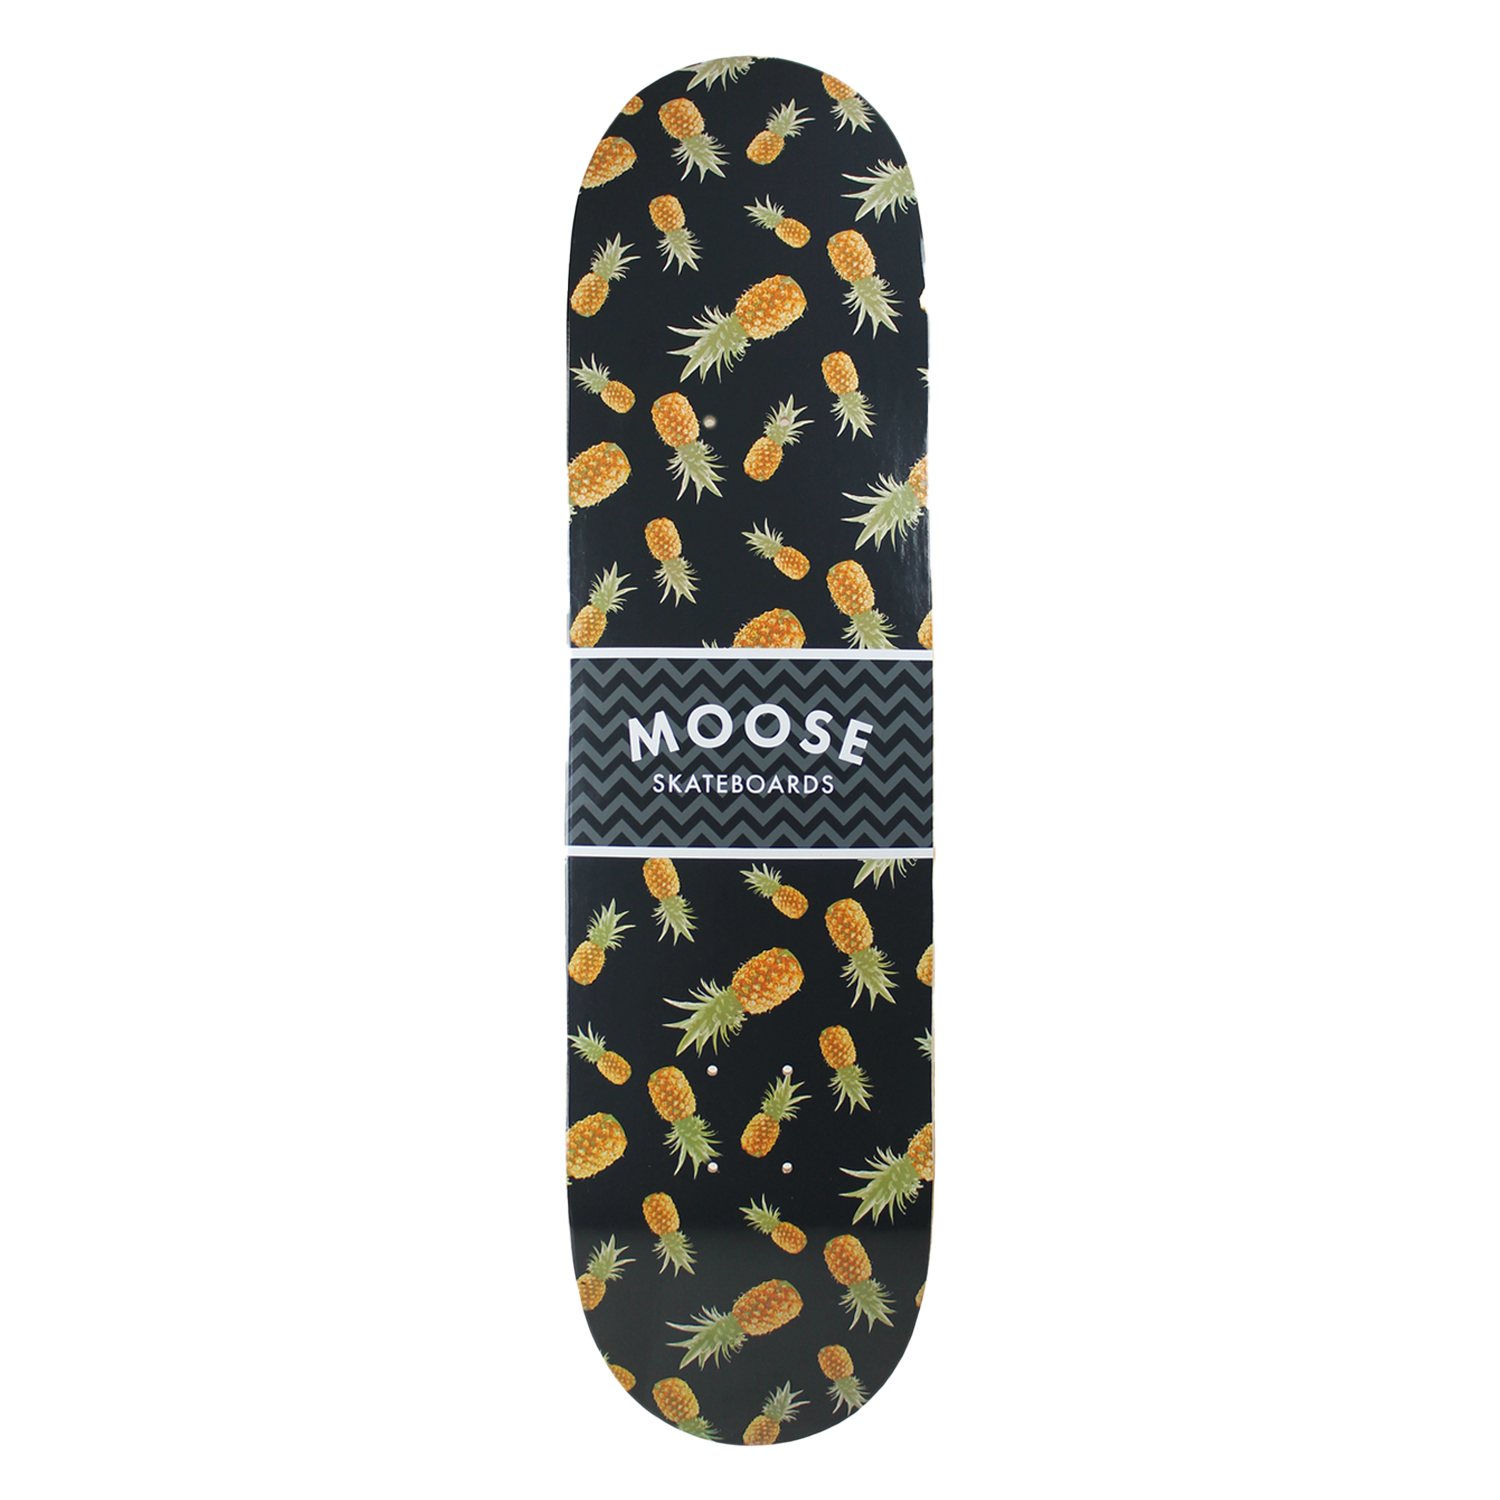 Moose Skateboard Deck Pineapple Black 8.125in, 8.5in